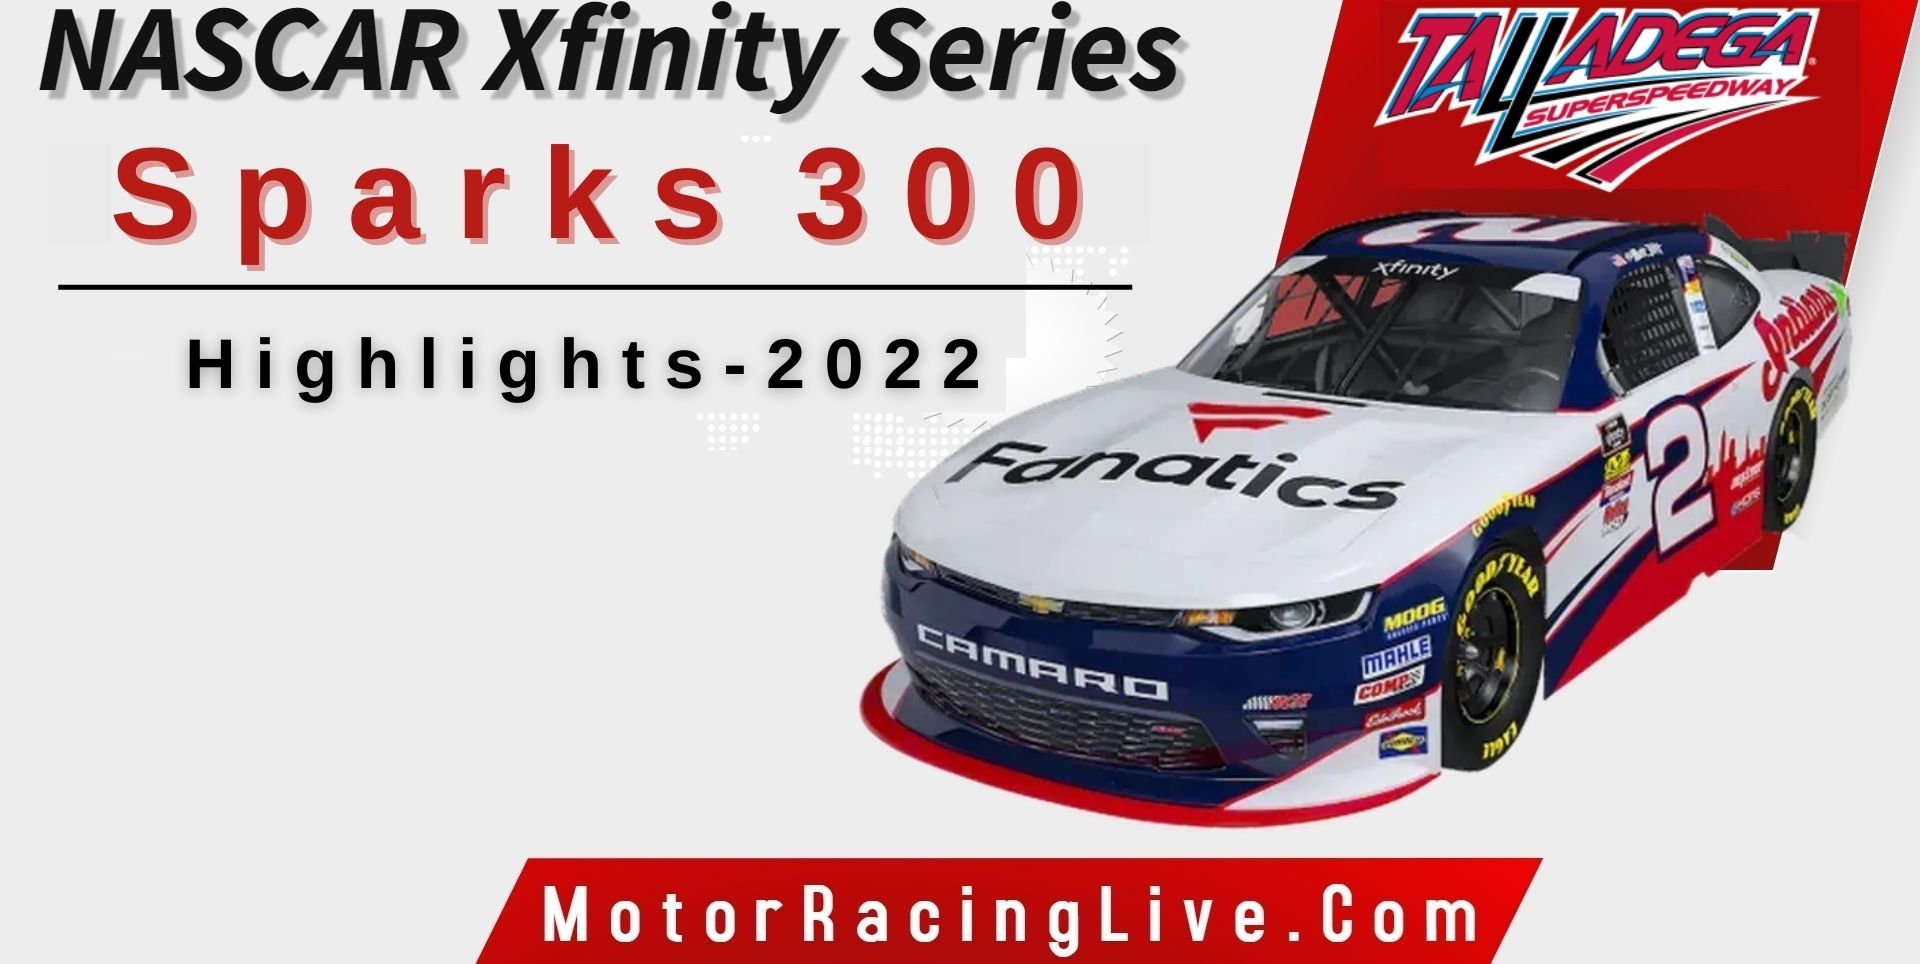 Sparks 300 Highlights 2022 NASCAR Xfinity